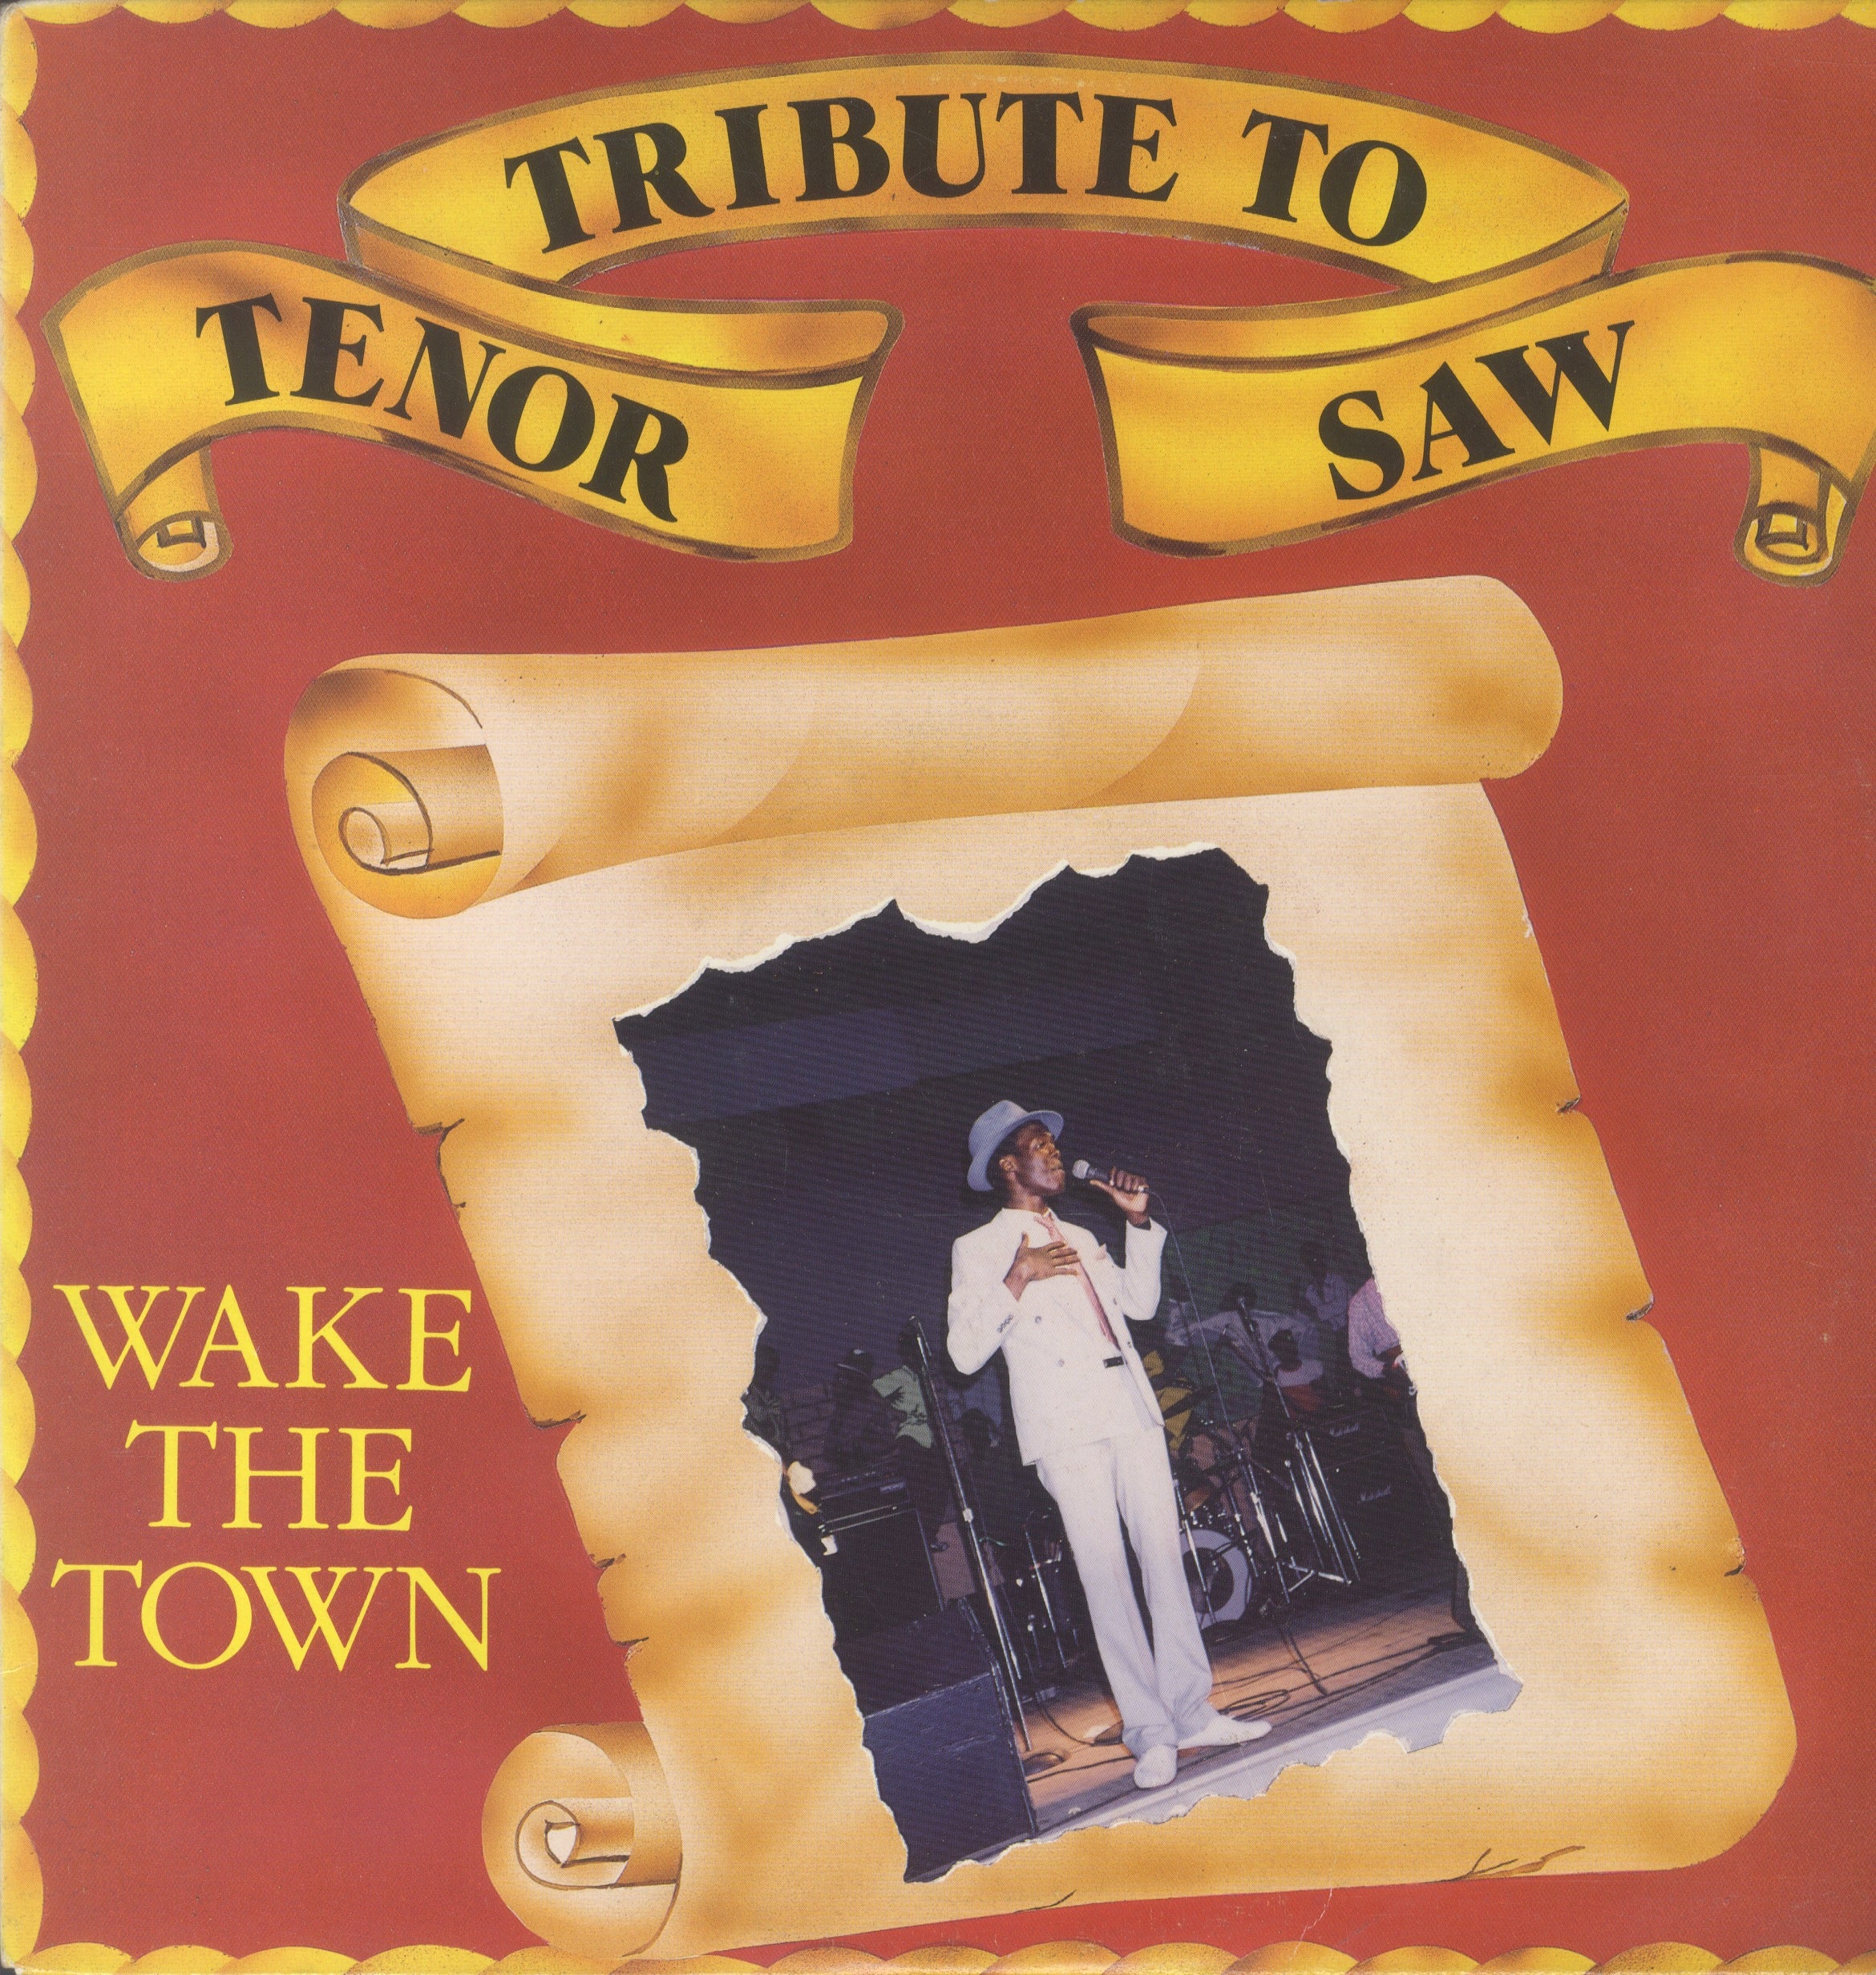 TENOR SAW [Wake The Town ( Tribute To Tenor Saw )]